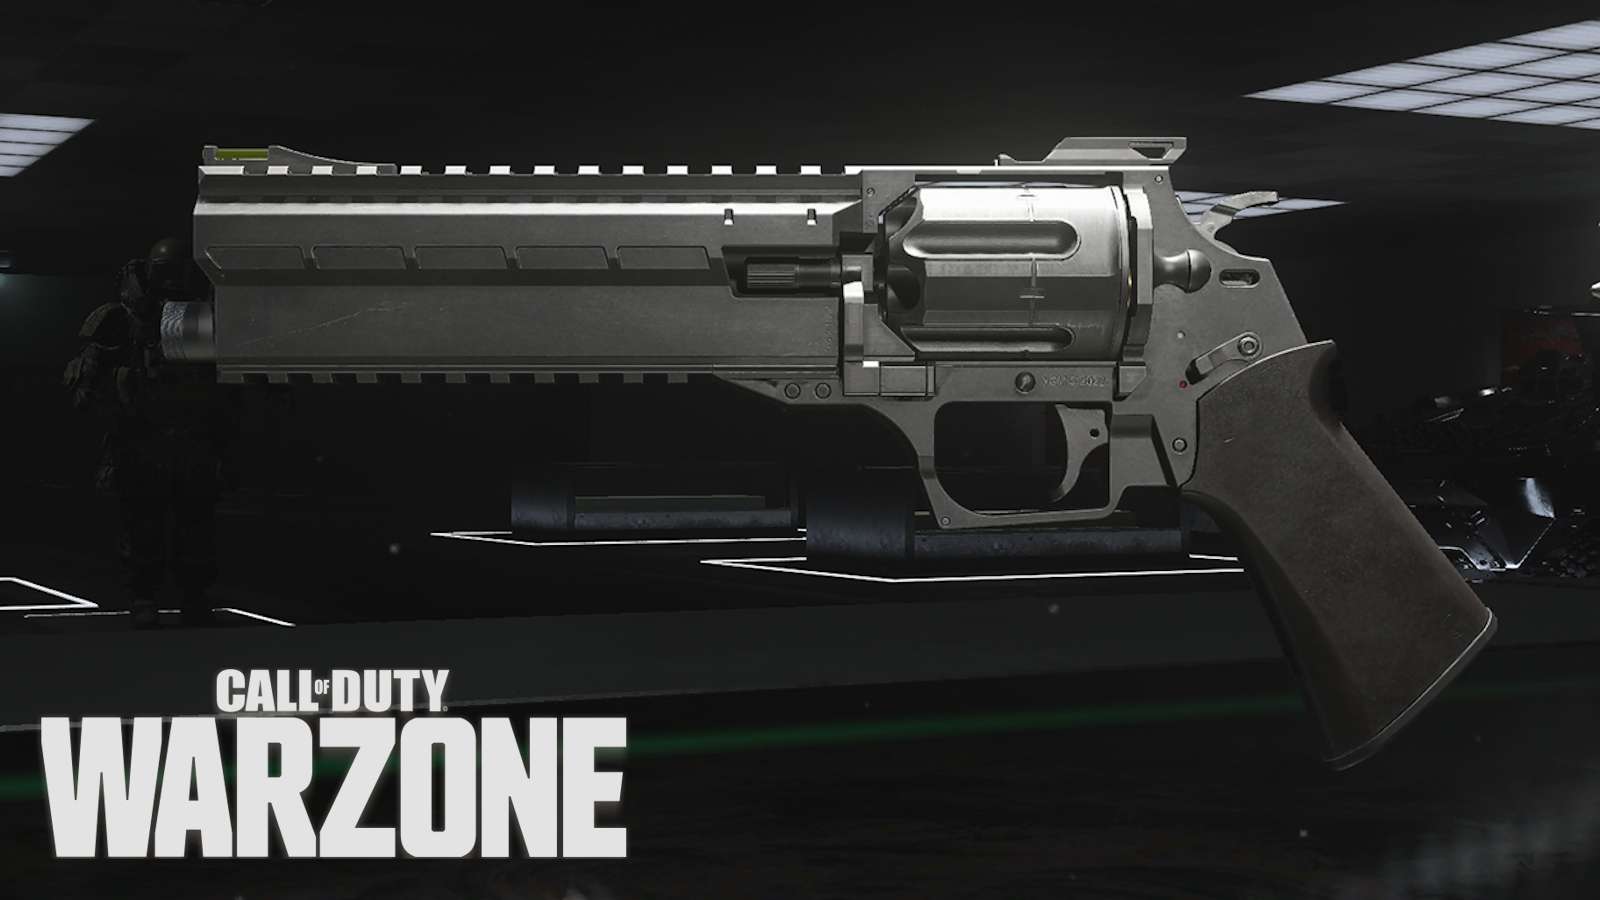 TYR handgun with Warzone logo.